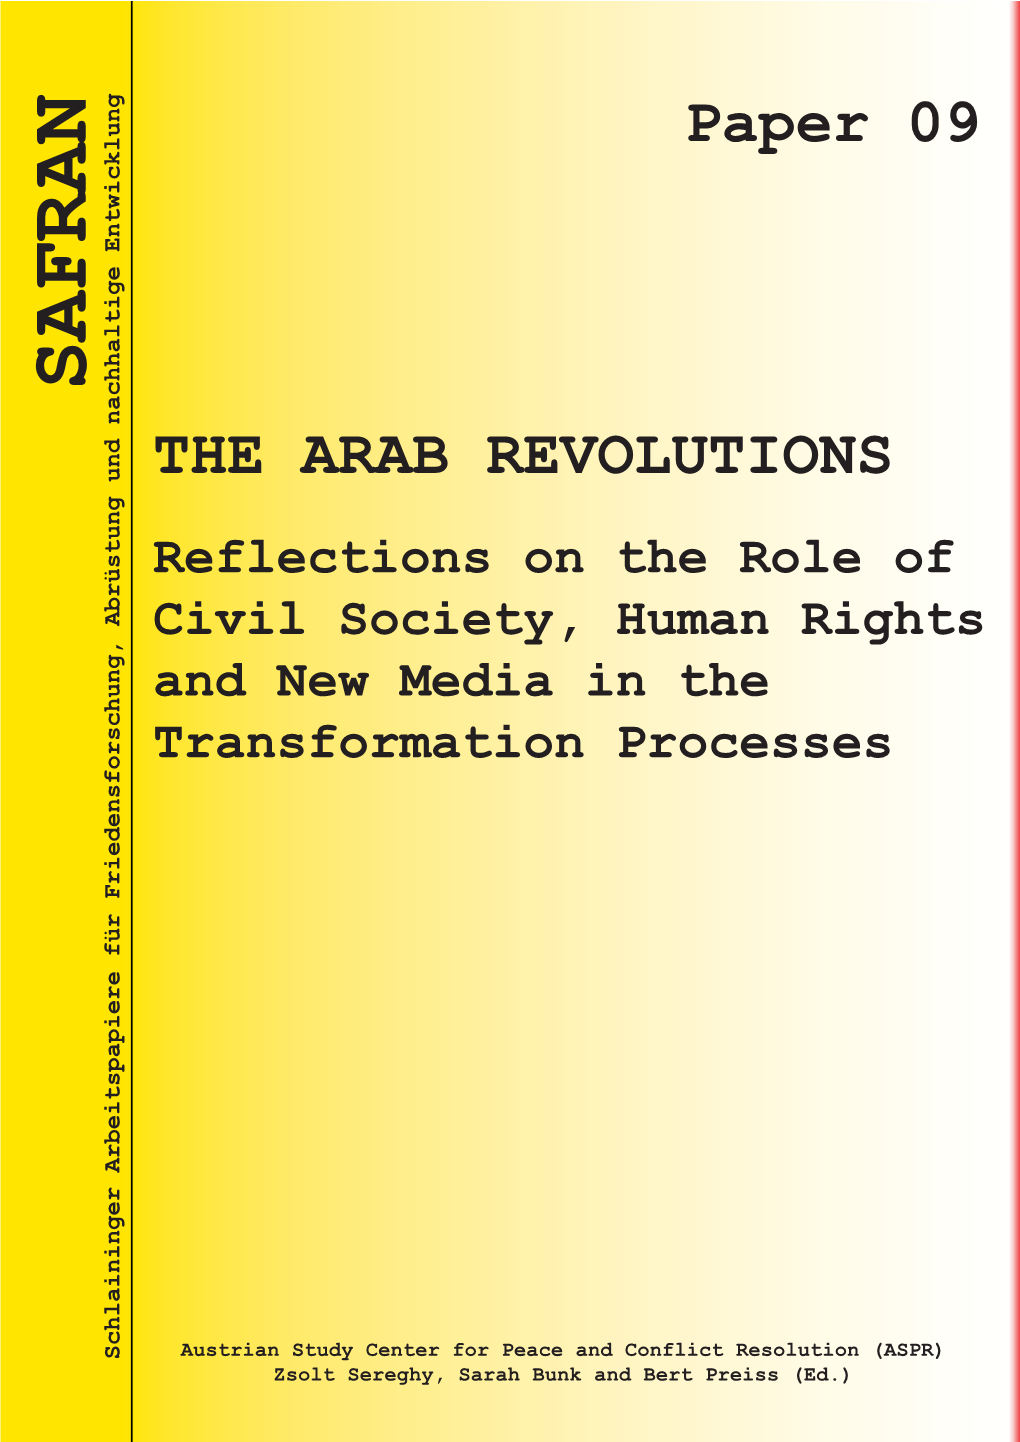 The Arab Revolutions